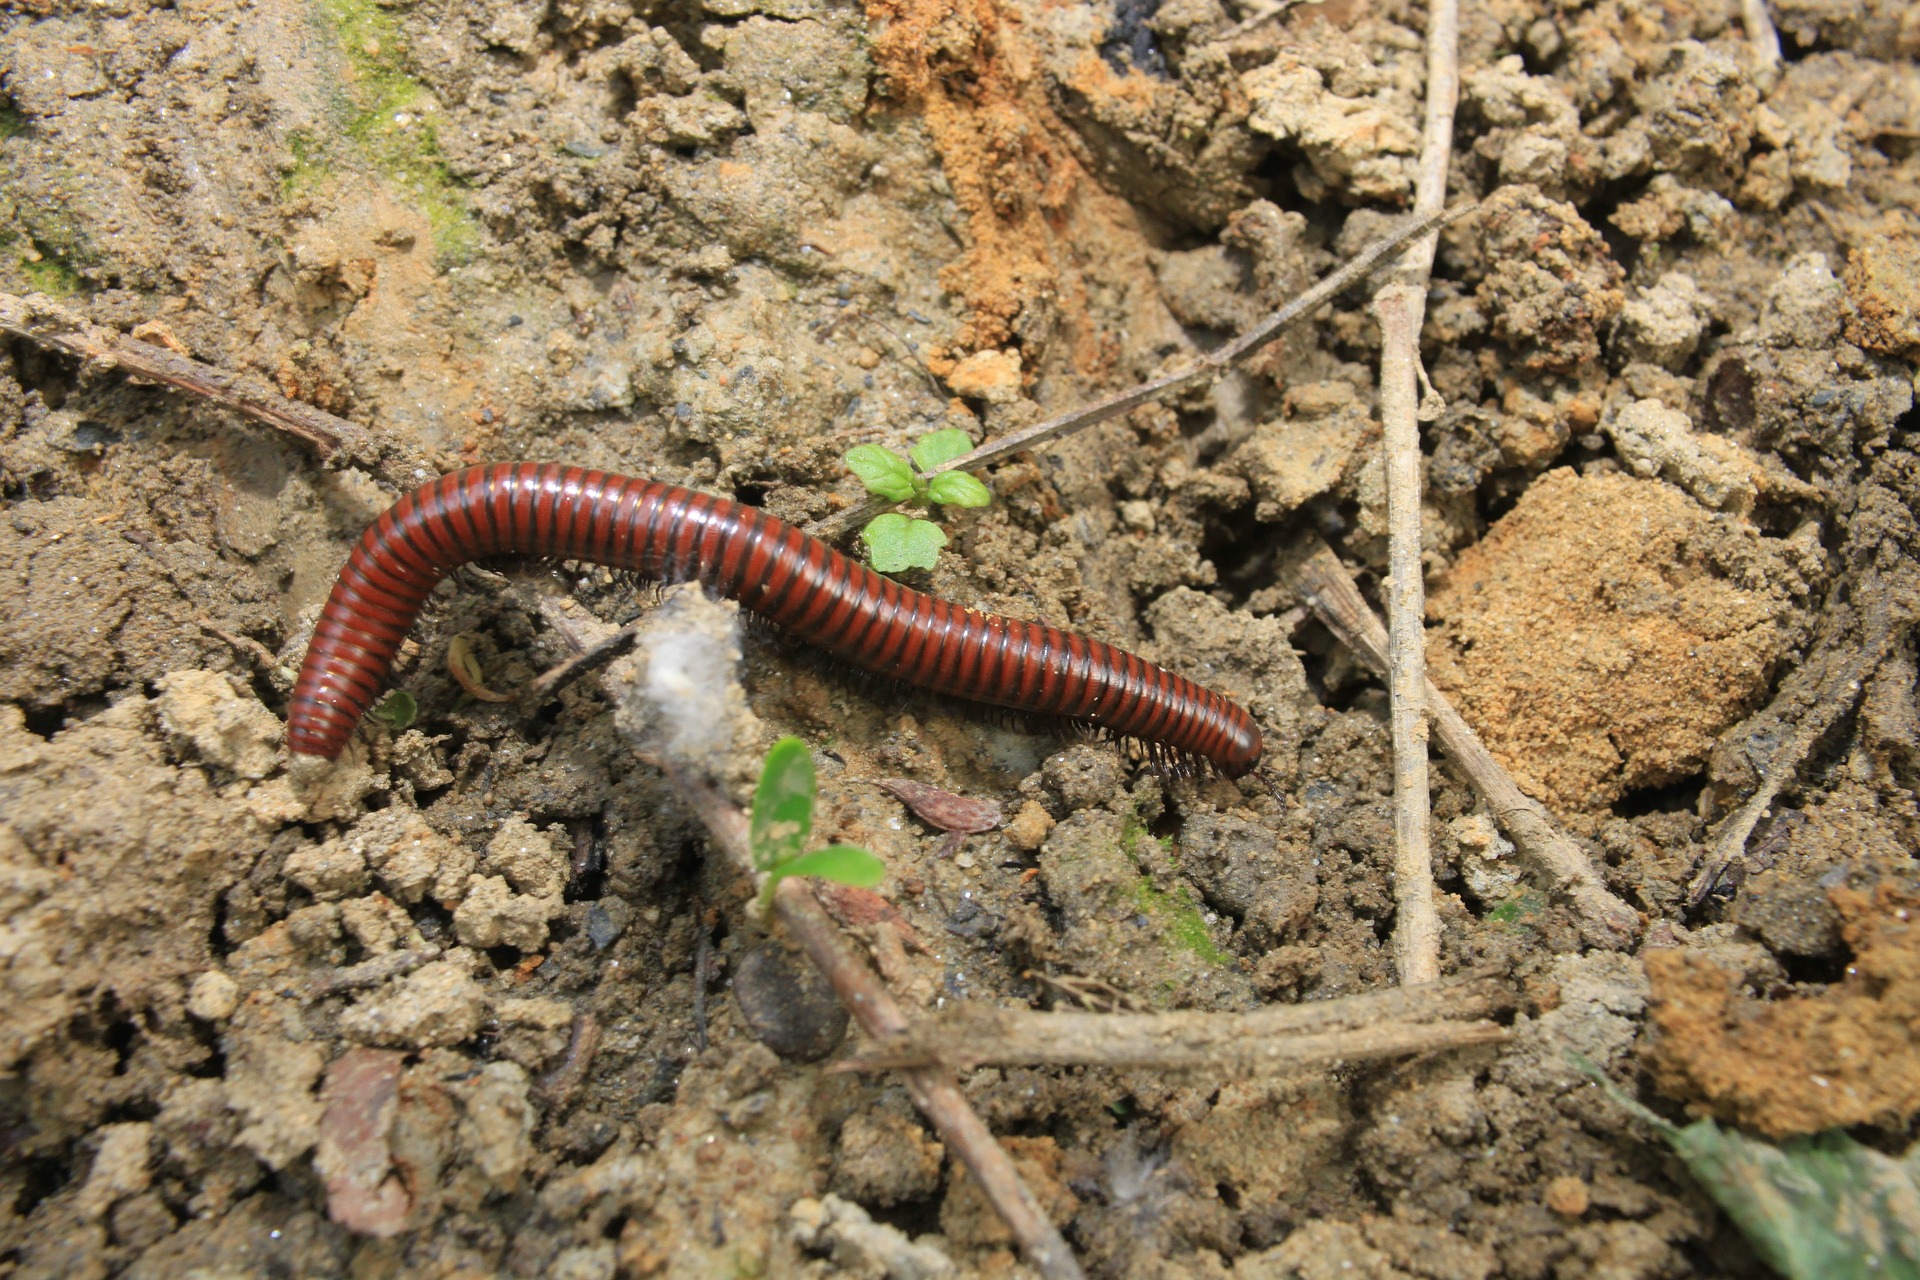 A giant millipede crawls across the dirt.